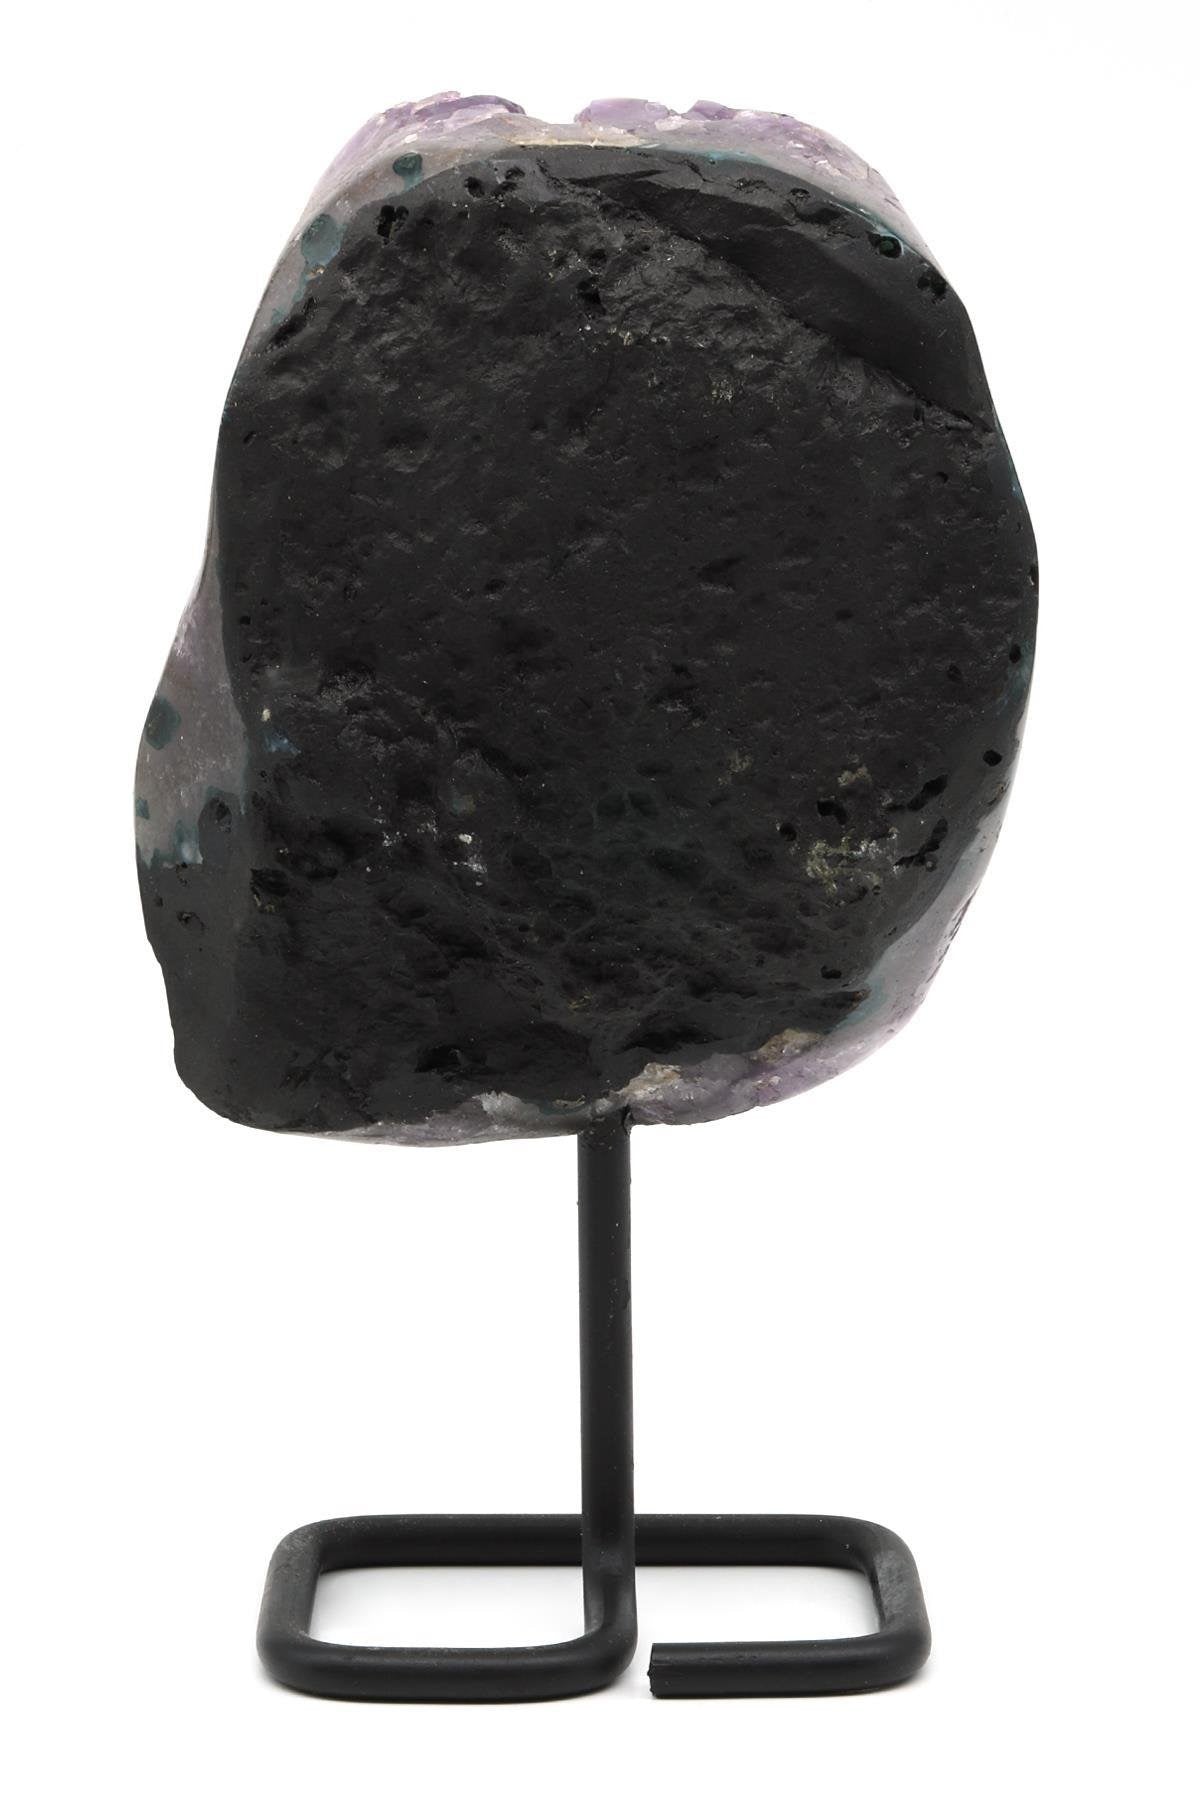 Brazilian Amethyst Geode on Metal Stand